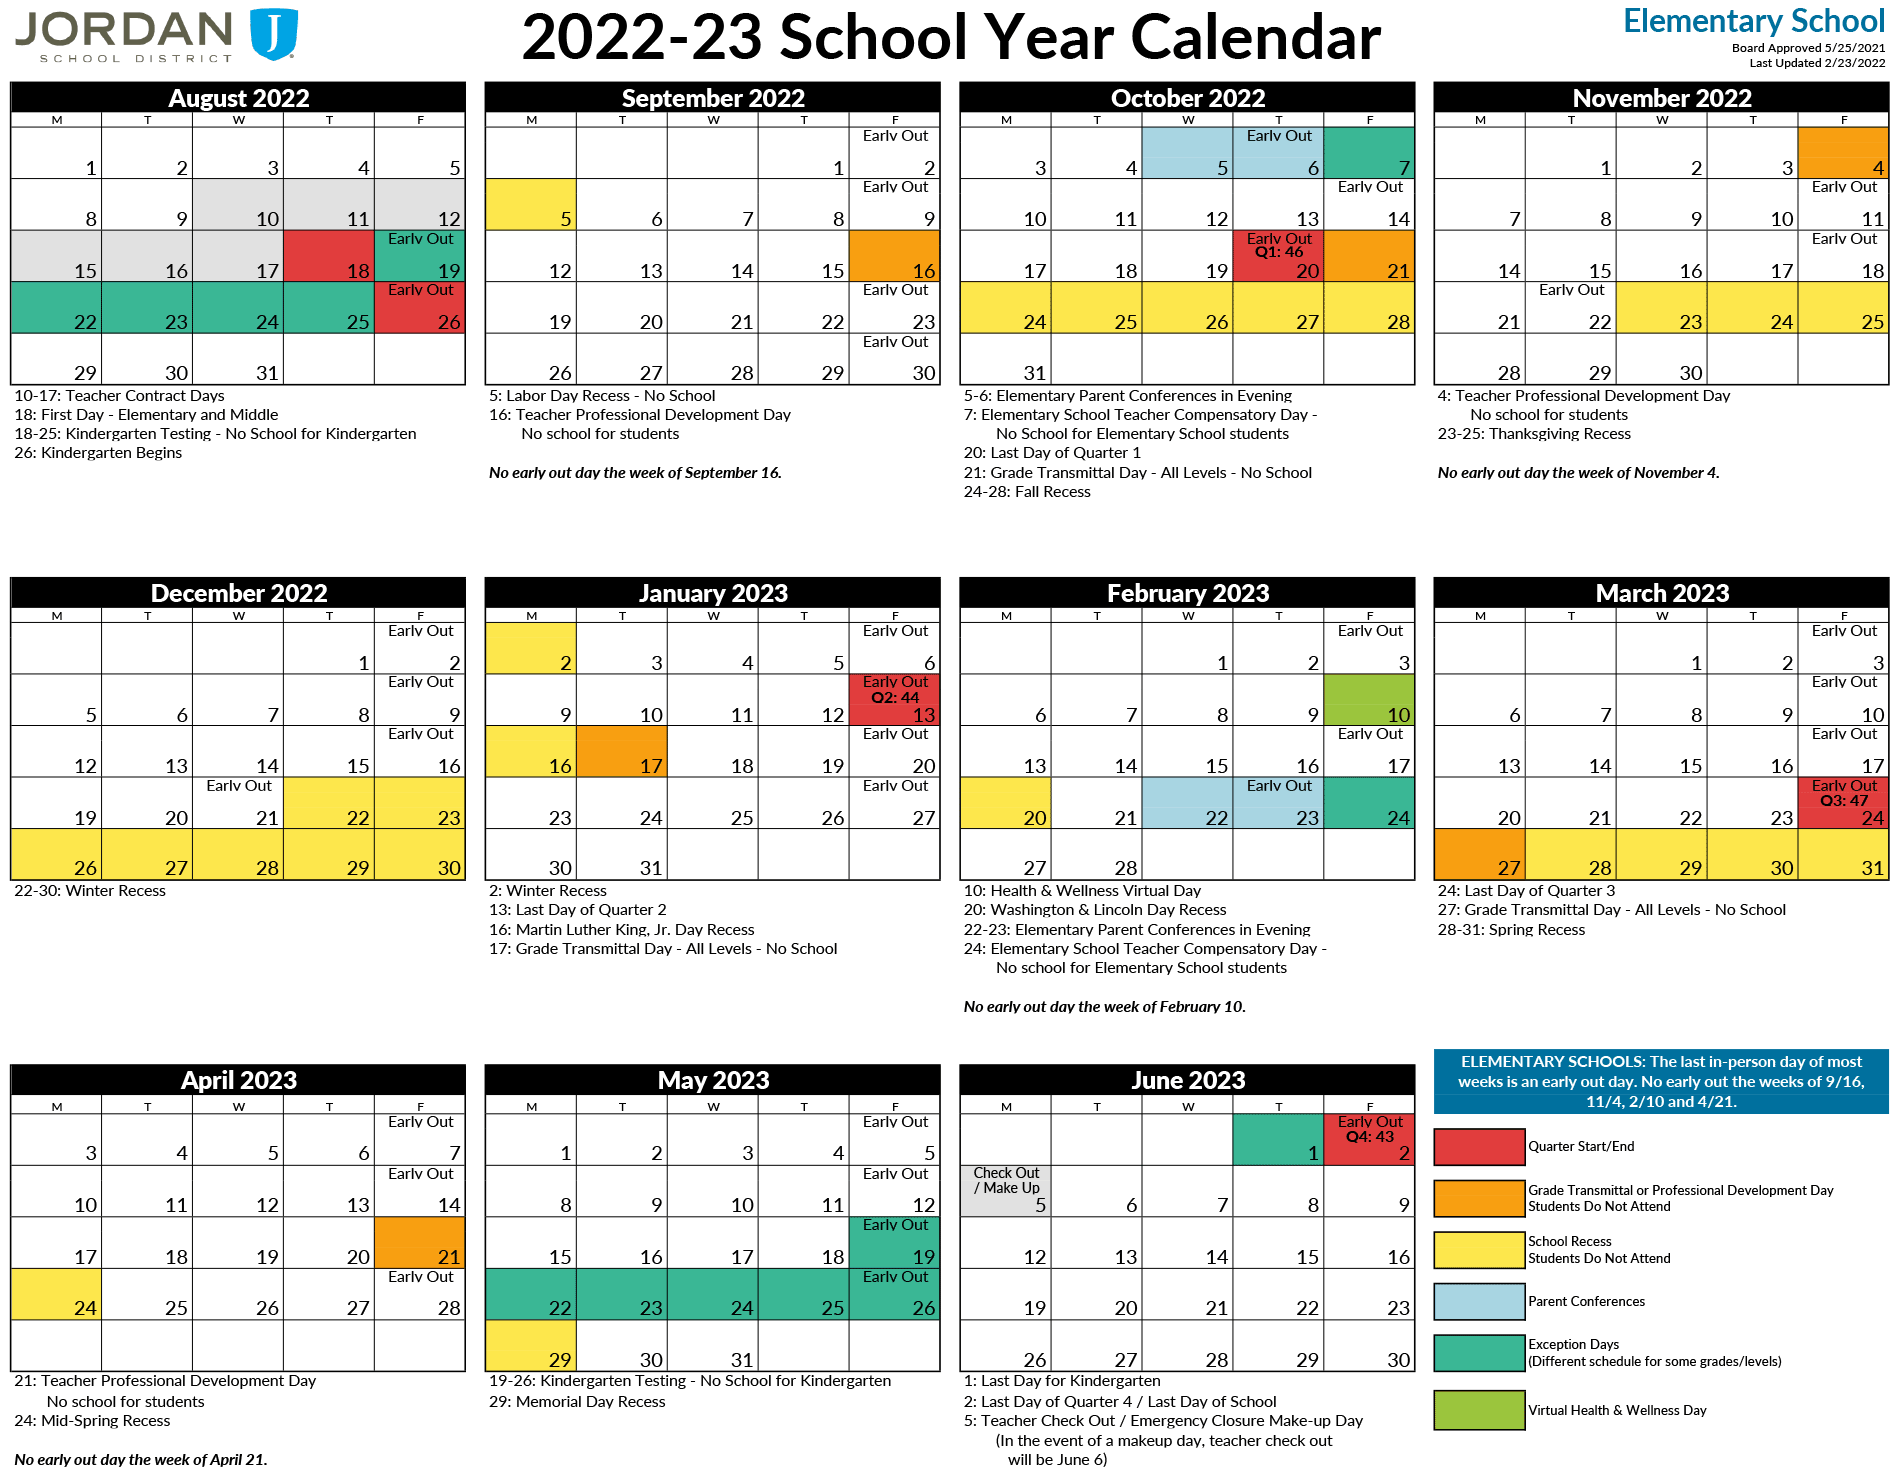 2022-23 Elementary School Calendar